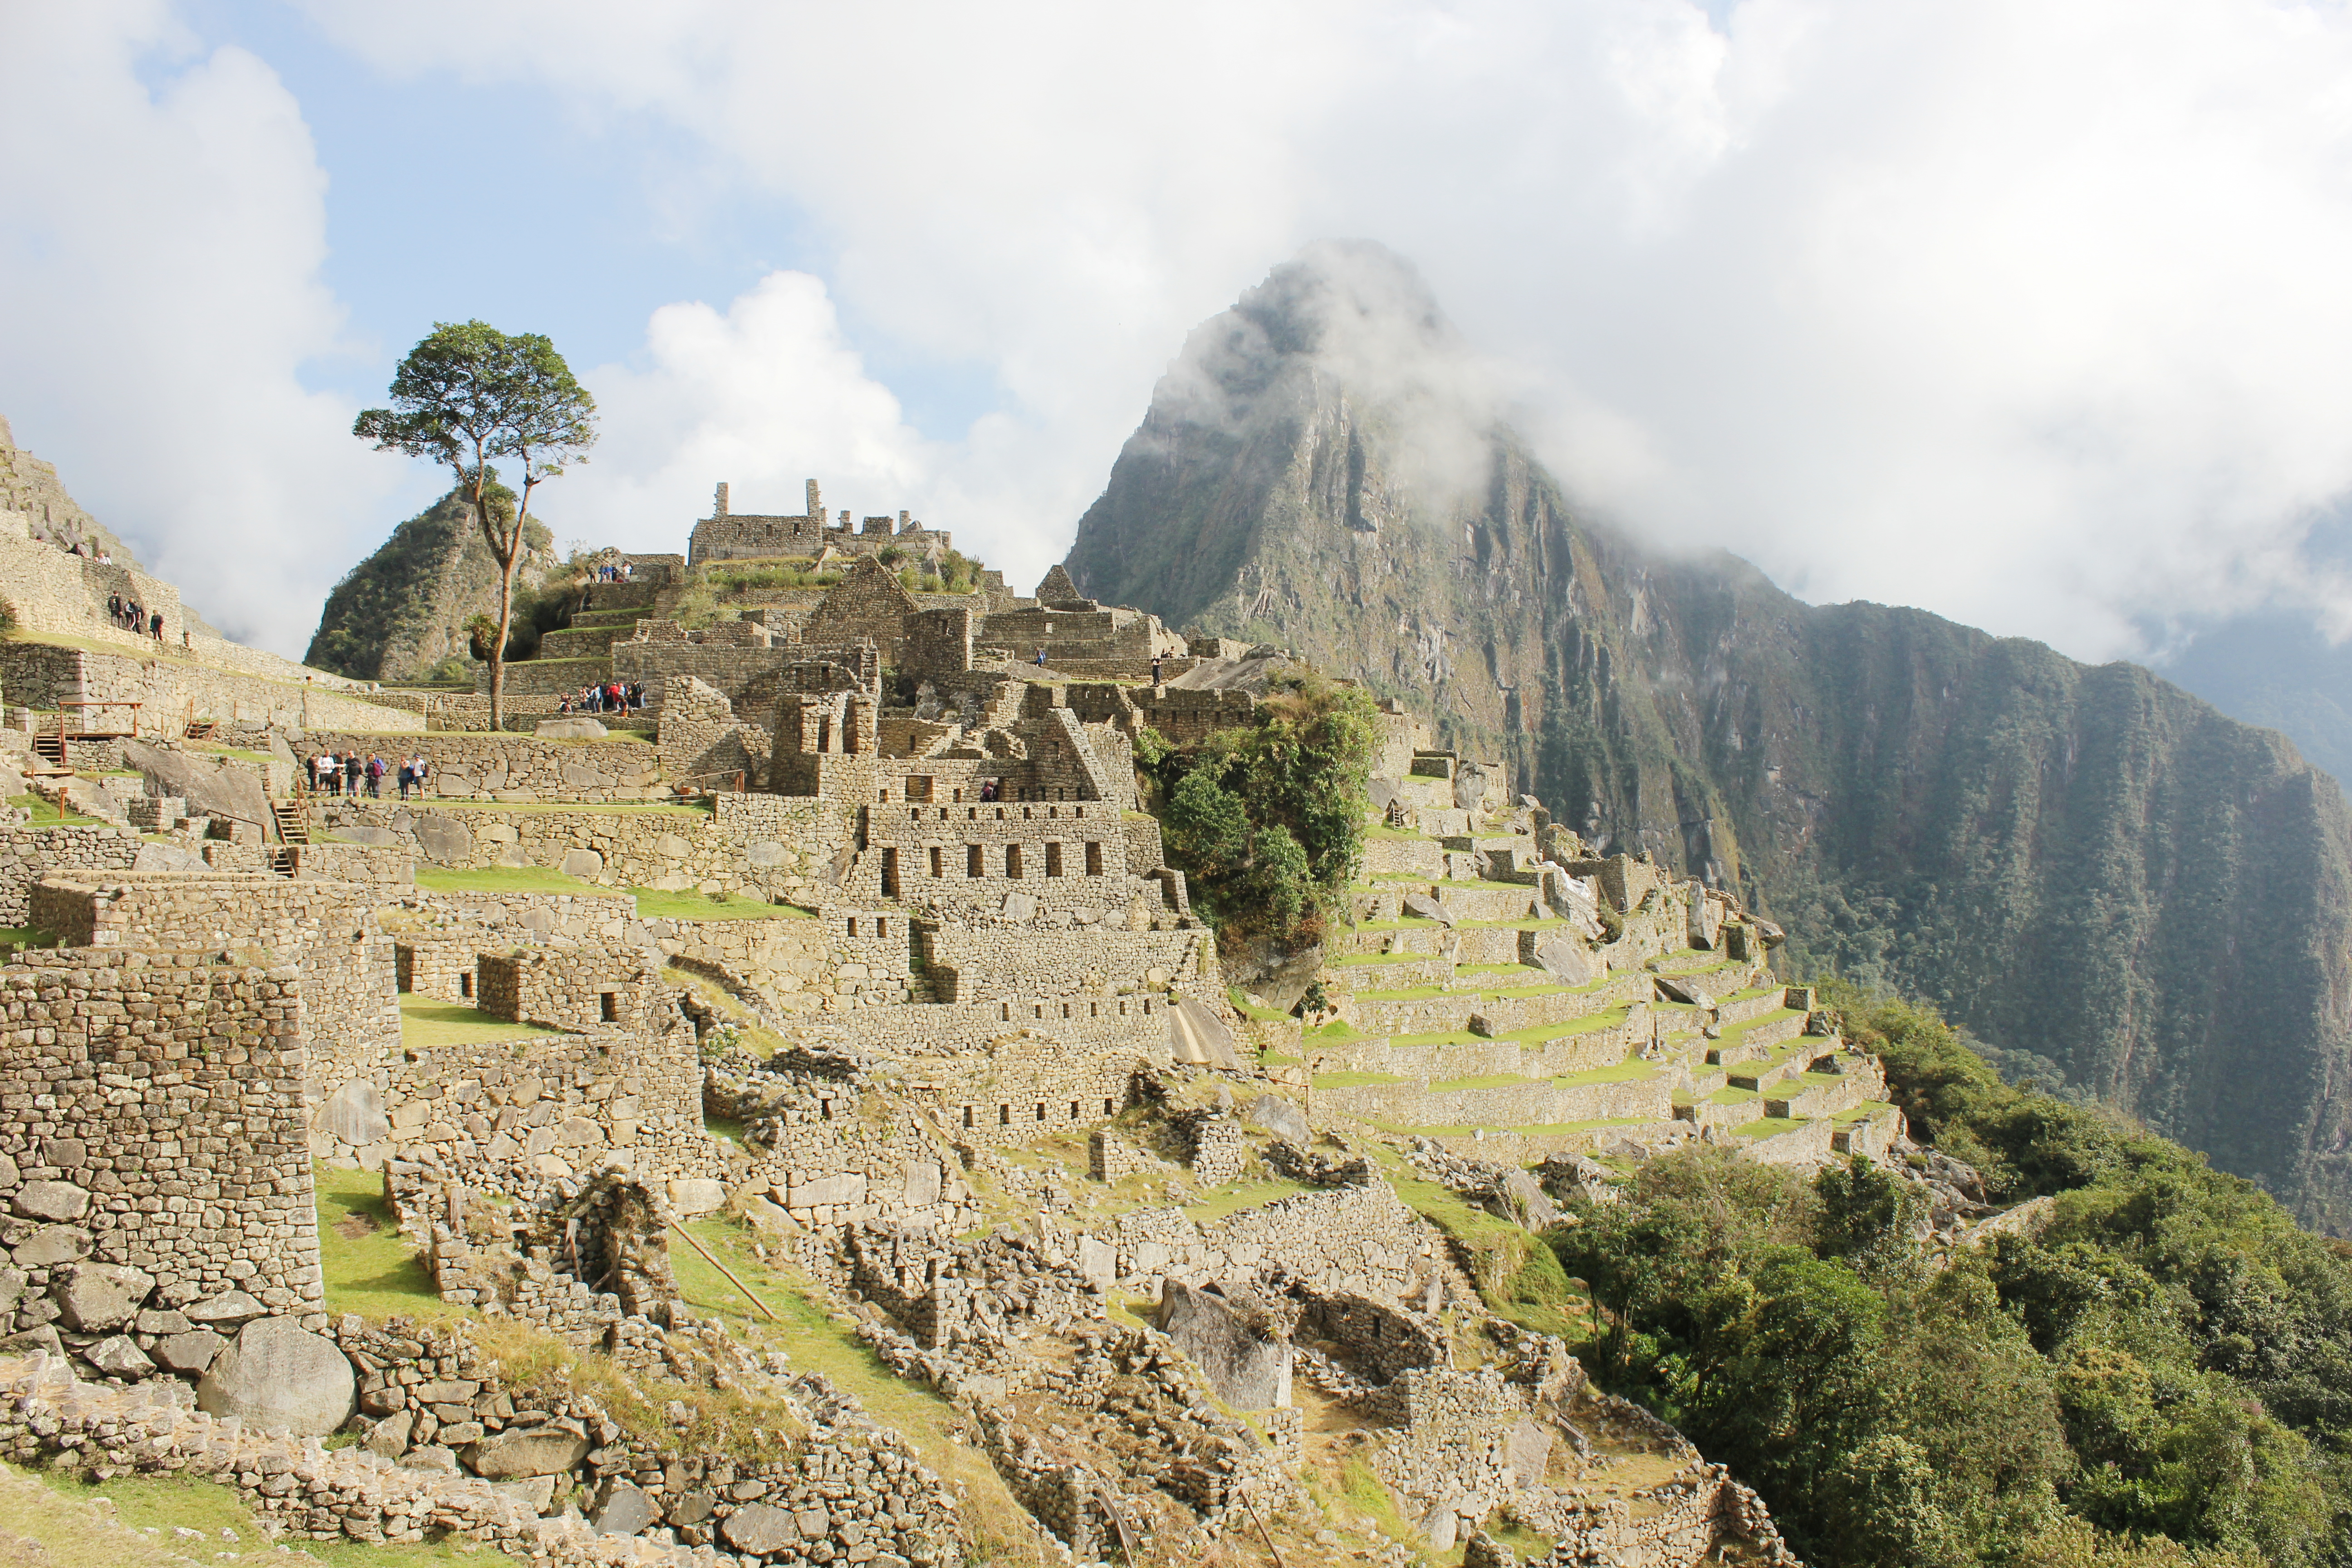 Macchu Picchu in the morning